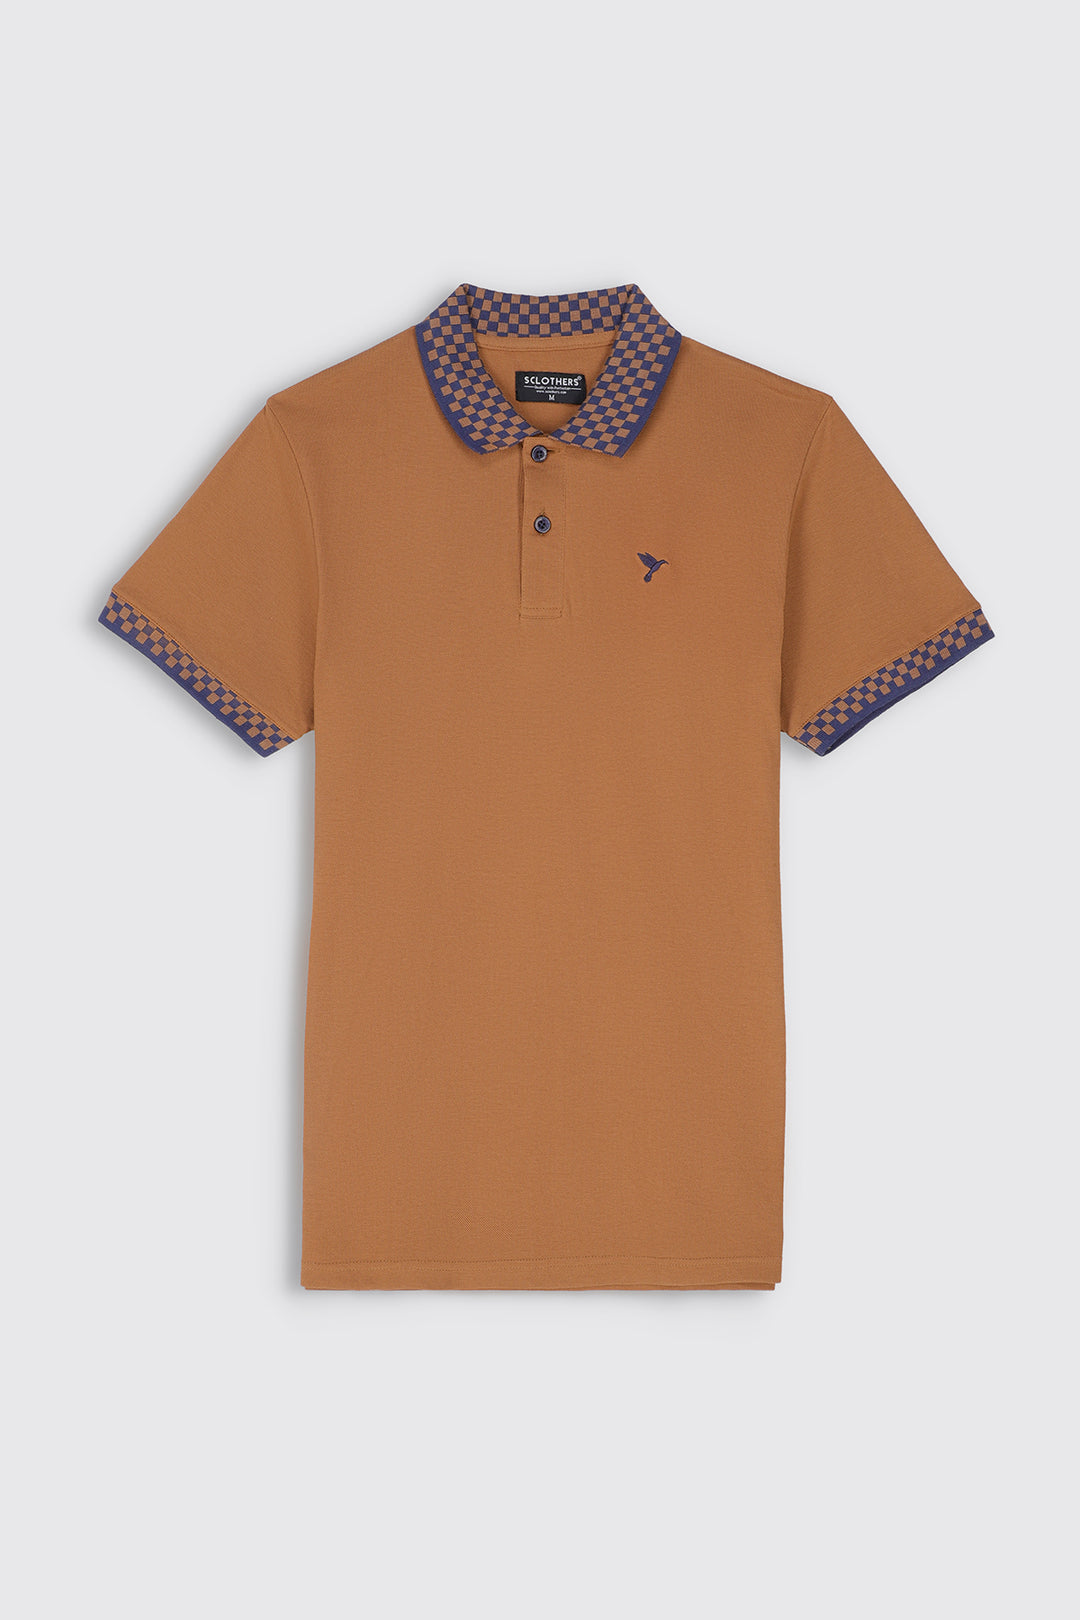 Tobacco Brown Jacquard Collar Polo Shirt (Plus Size) - S23 - MP0218P